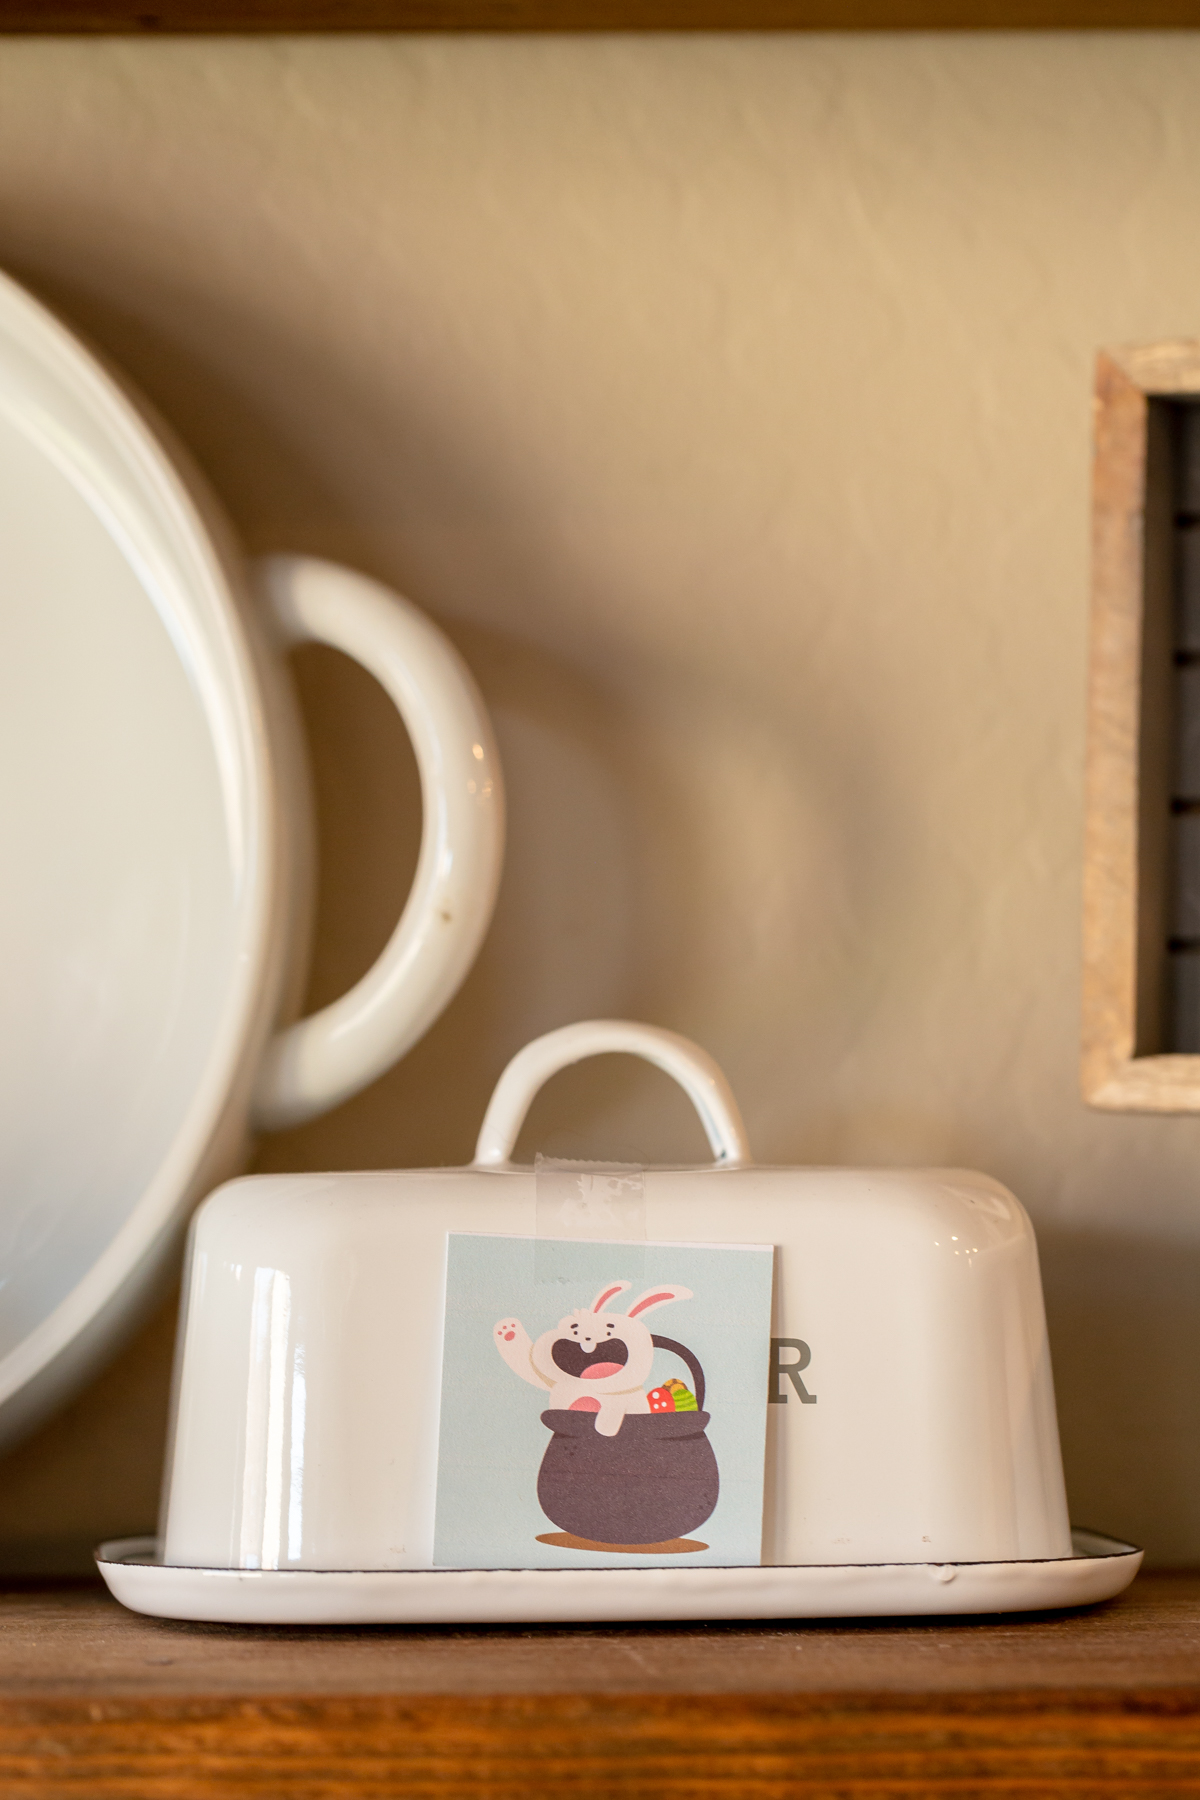 Easter bunny card hidden on a butter dish